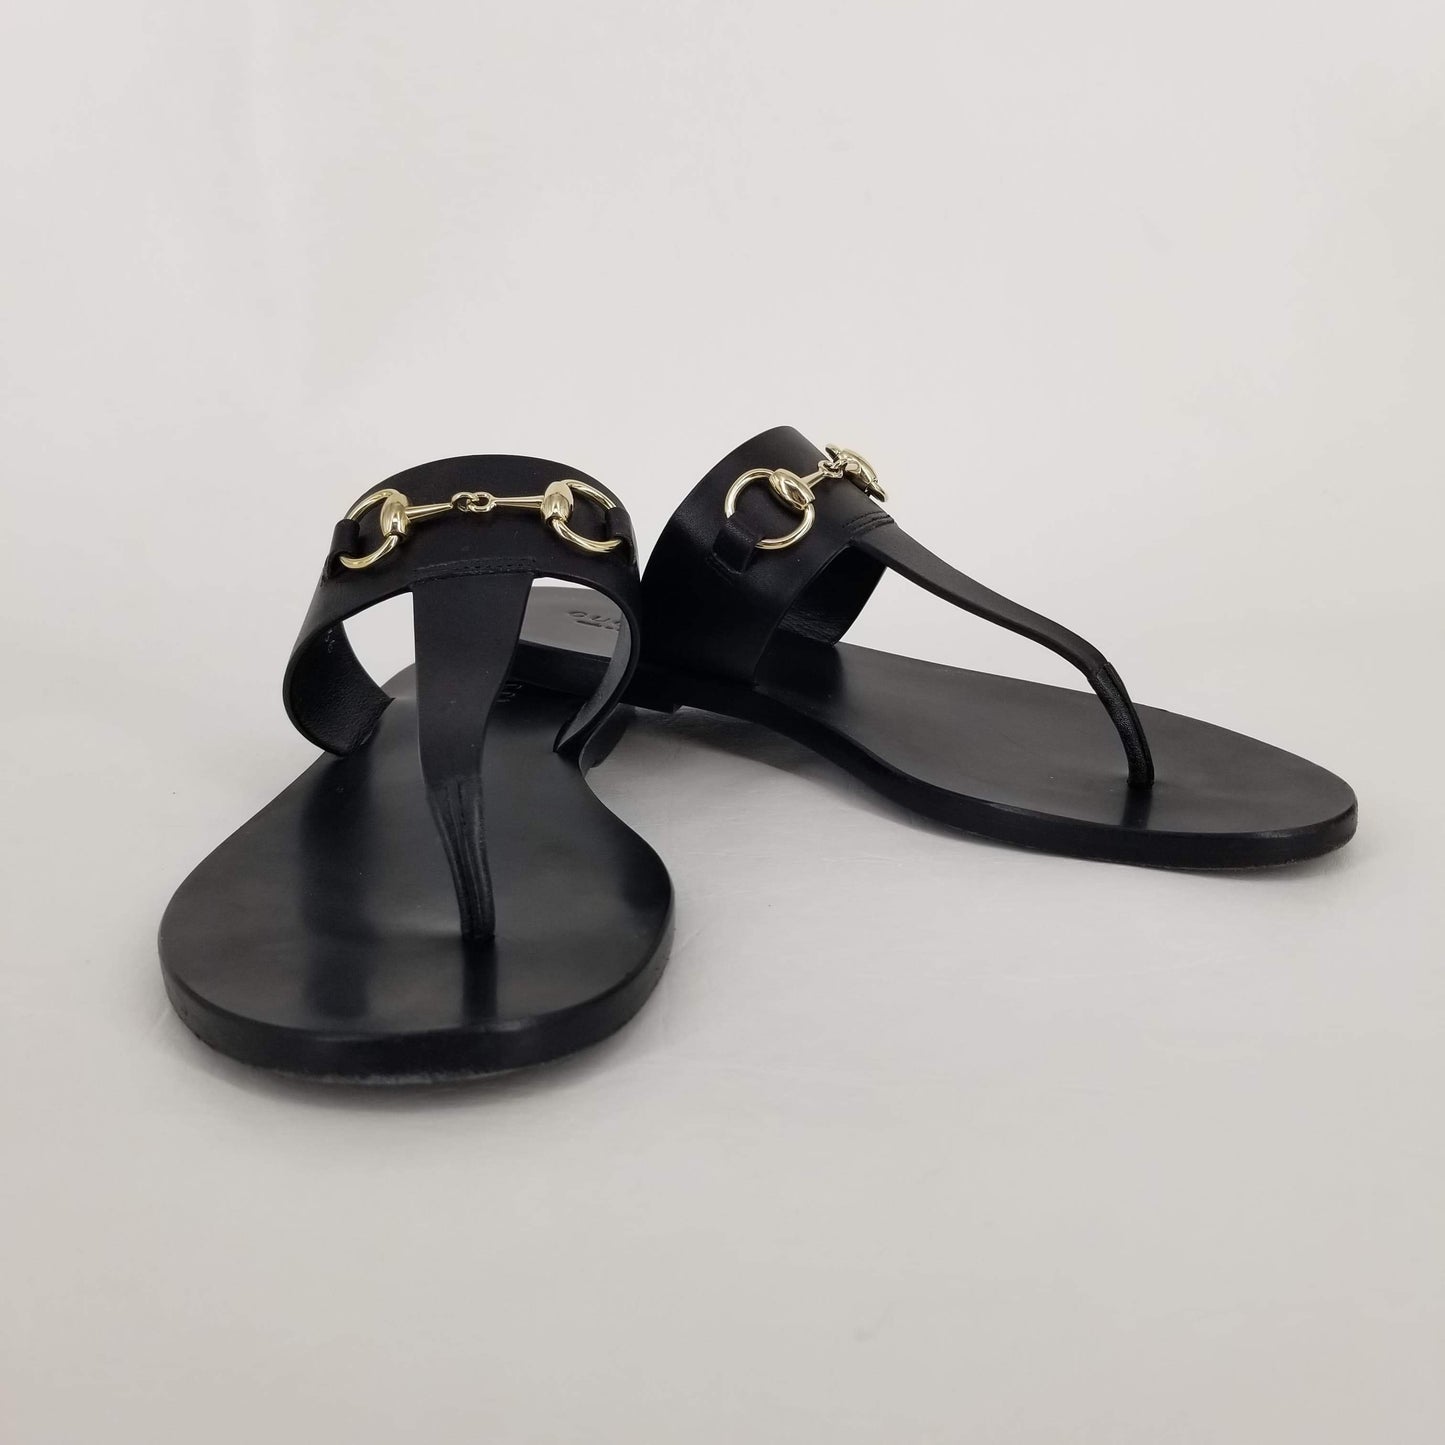 Authentic Gucci Black Horsebit Thong Sandals